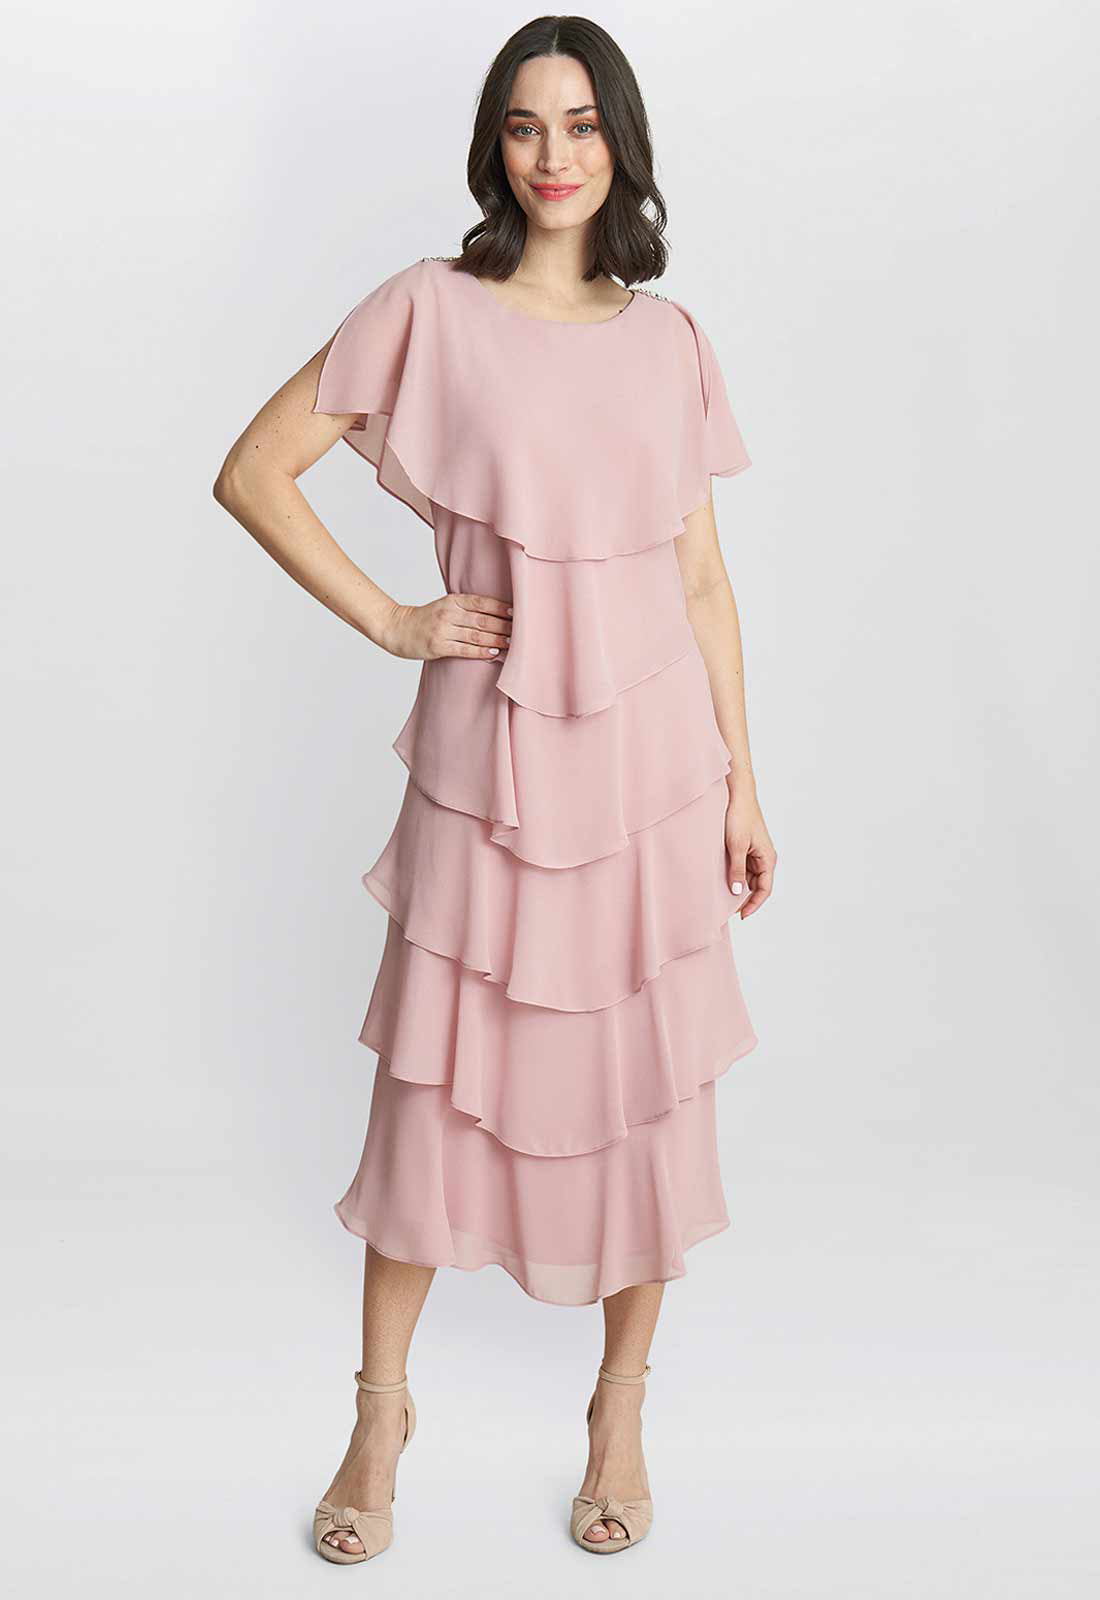 Gina BacconGina Bacconi  Pink Tessa Midi Tiered Dress i  Pink Tessa Midi Tiered Dress 